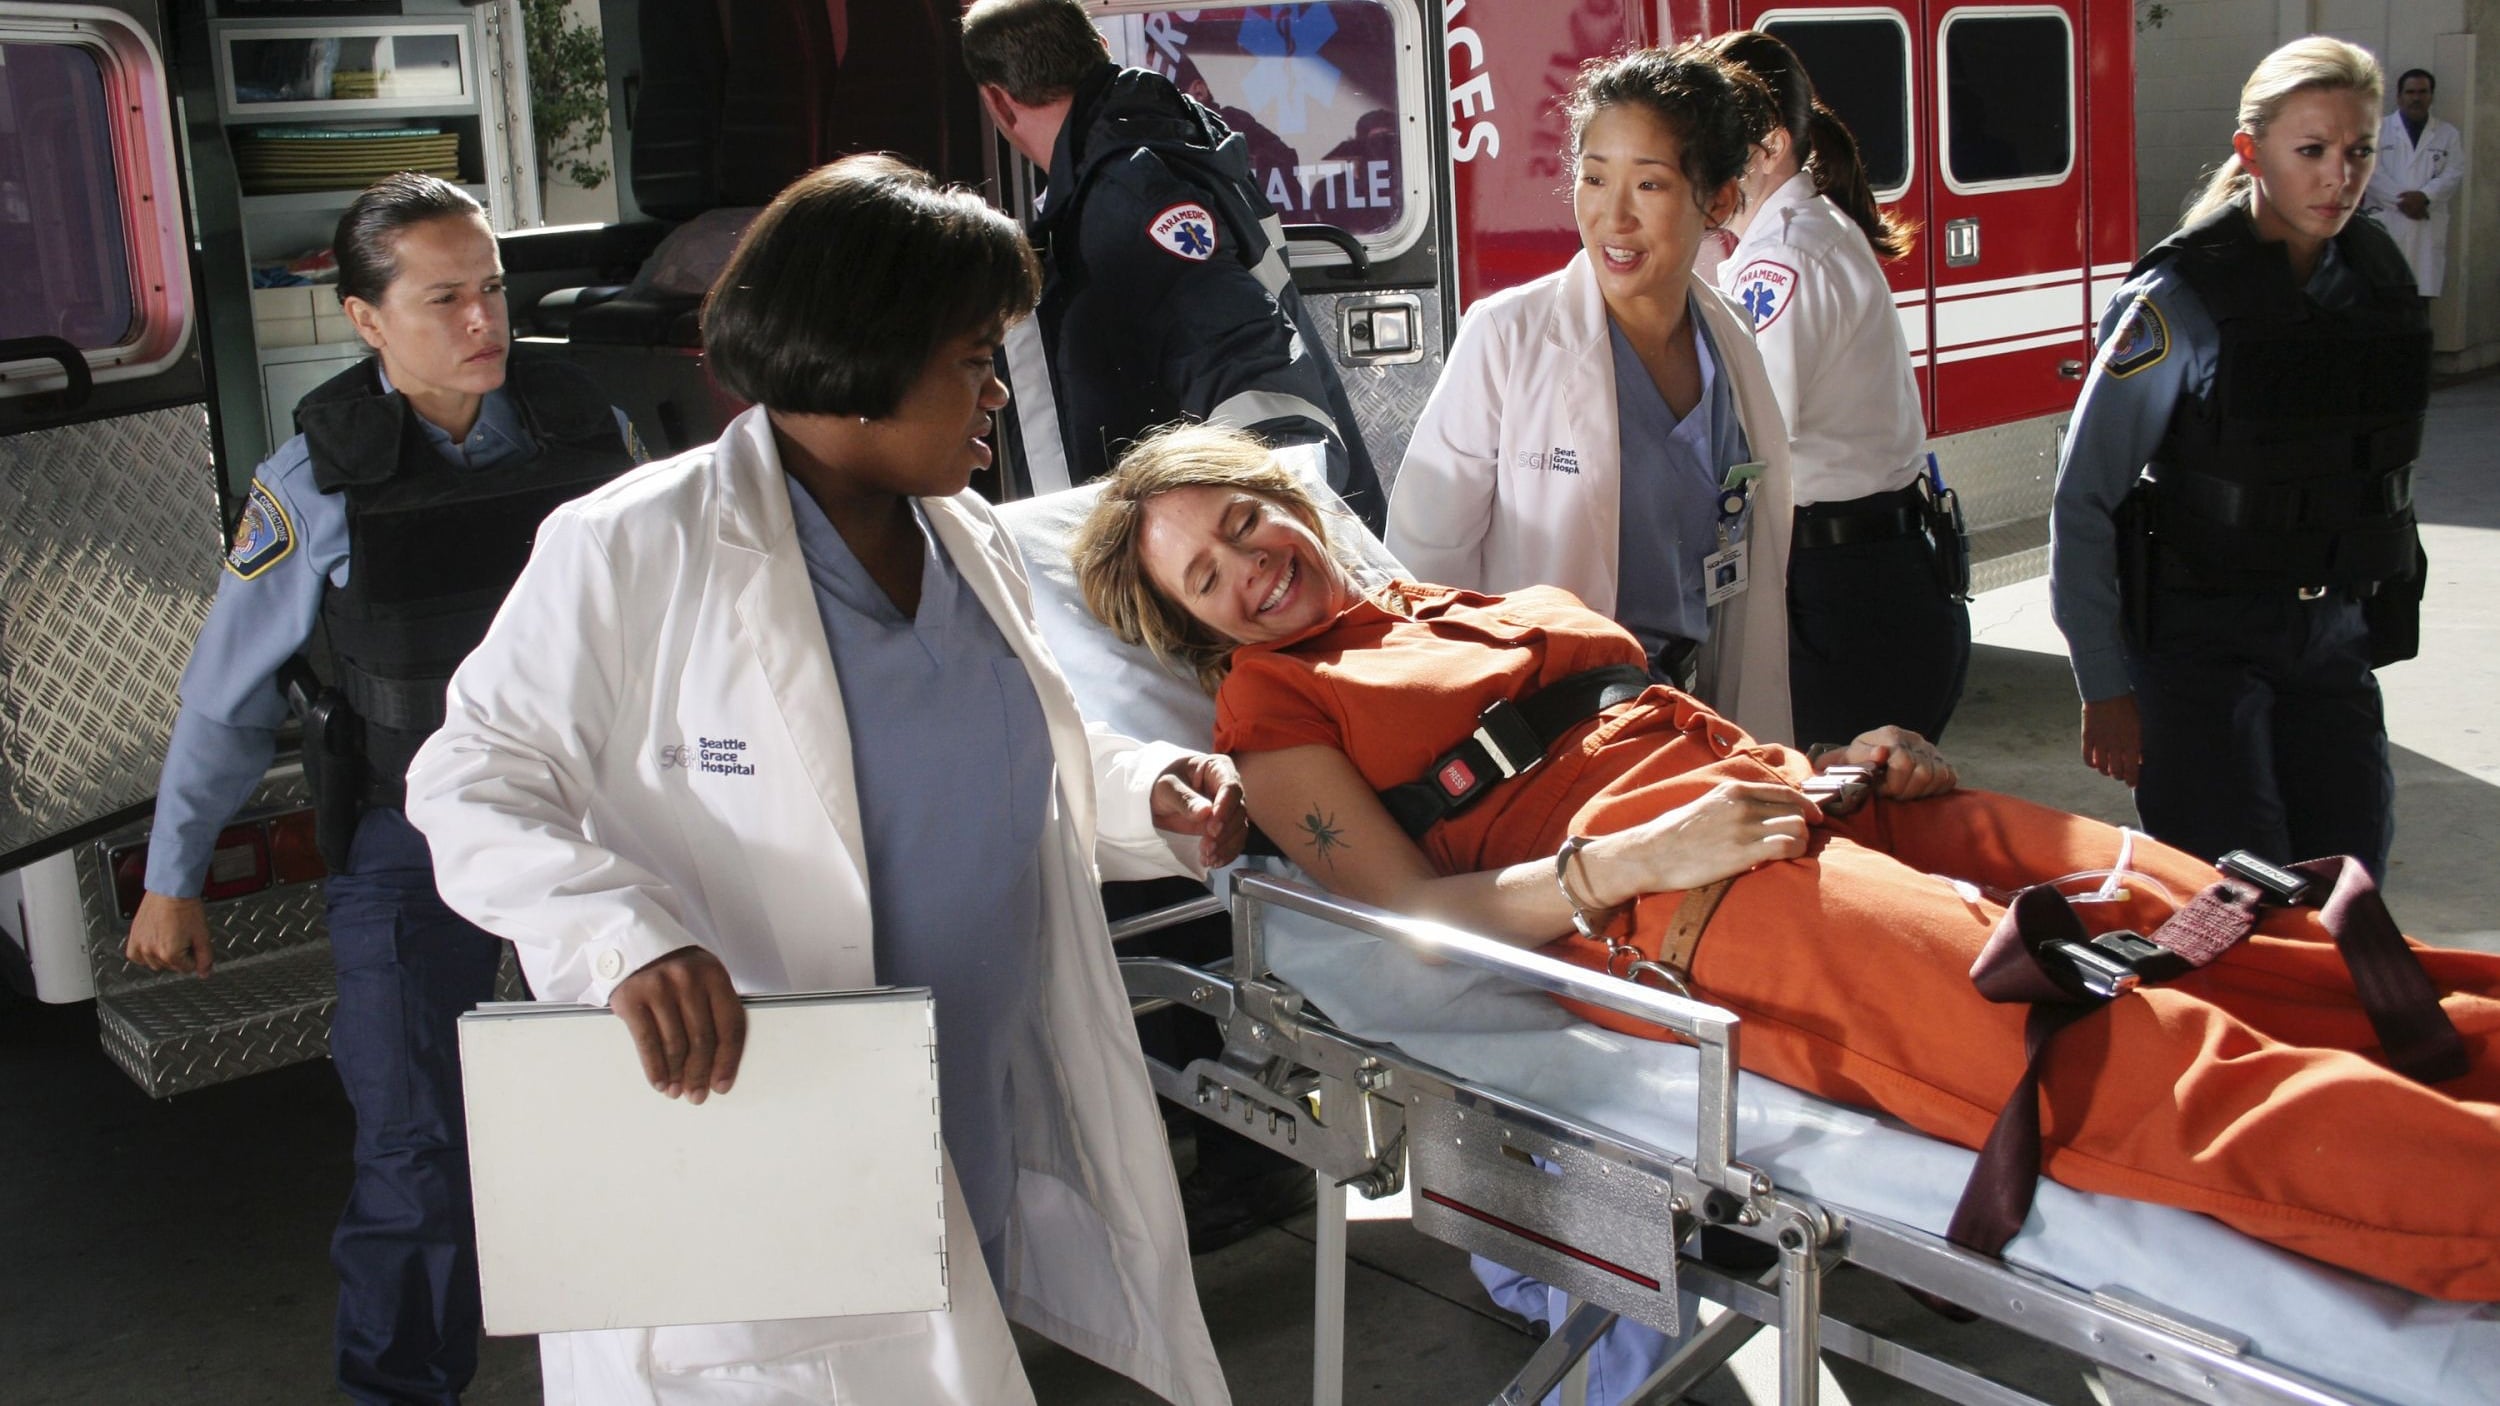 Grey's Anatomy: Season 2-Episode 11 Openload Watch Online Full Episode Free TV Show2500 x 1406